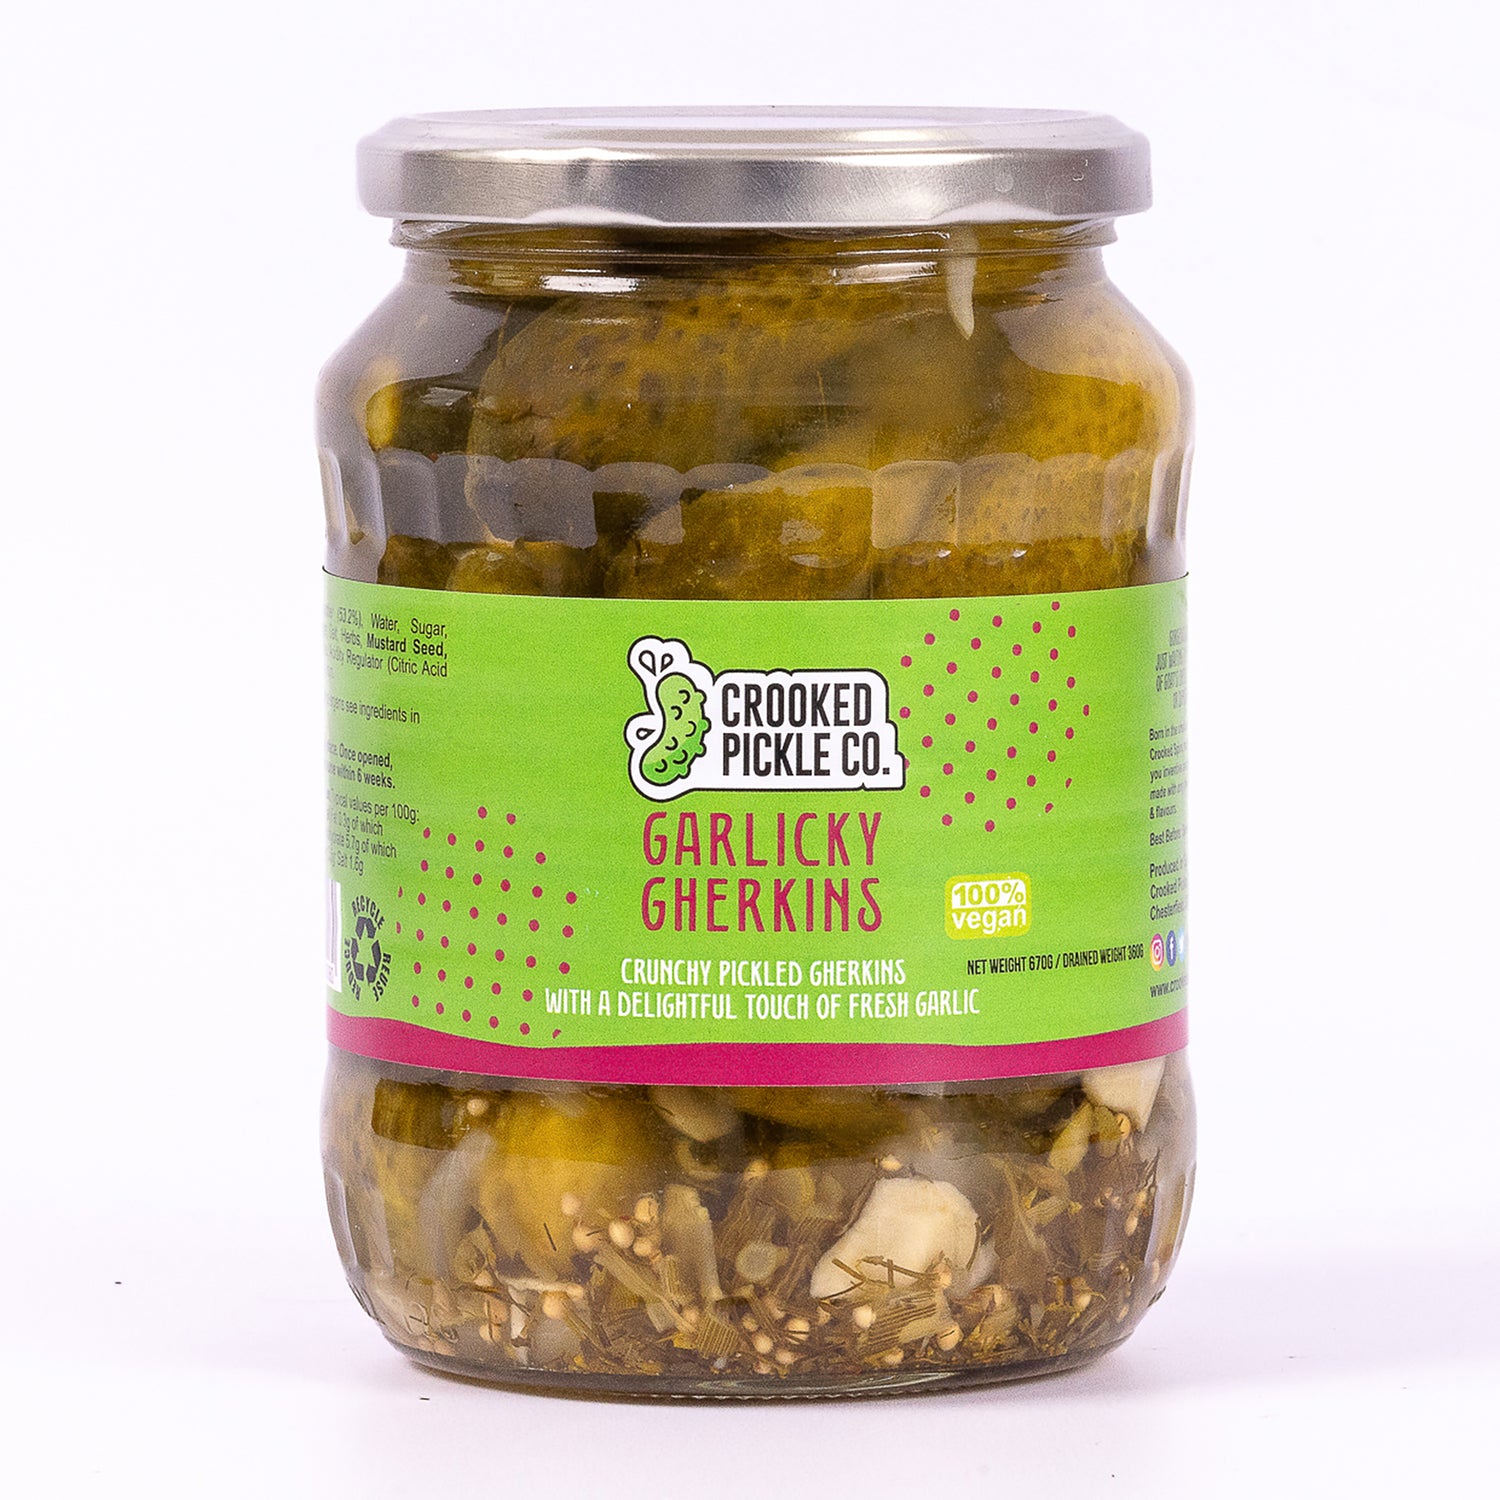 Crunchy Garlic pickles and gherkins in a jar.